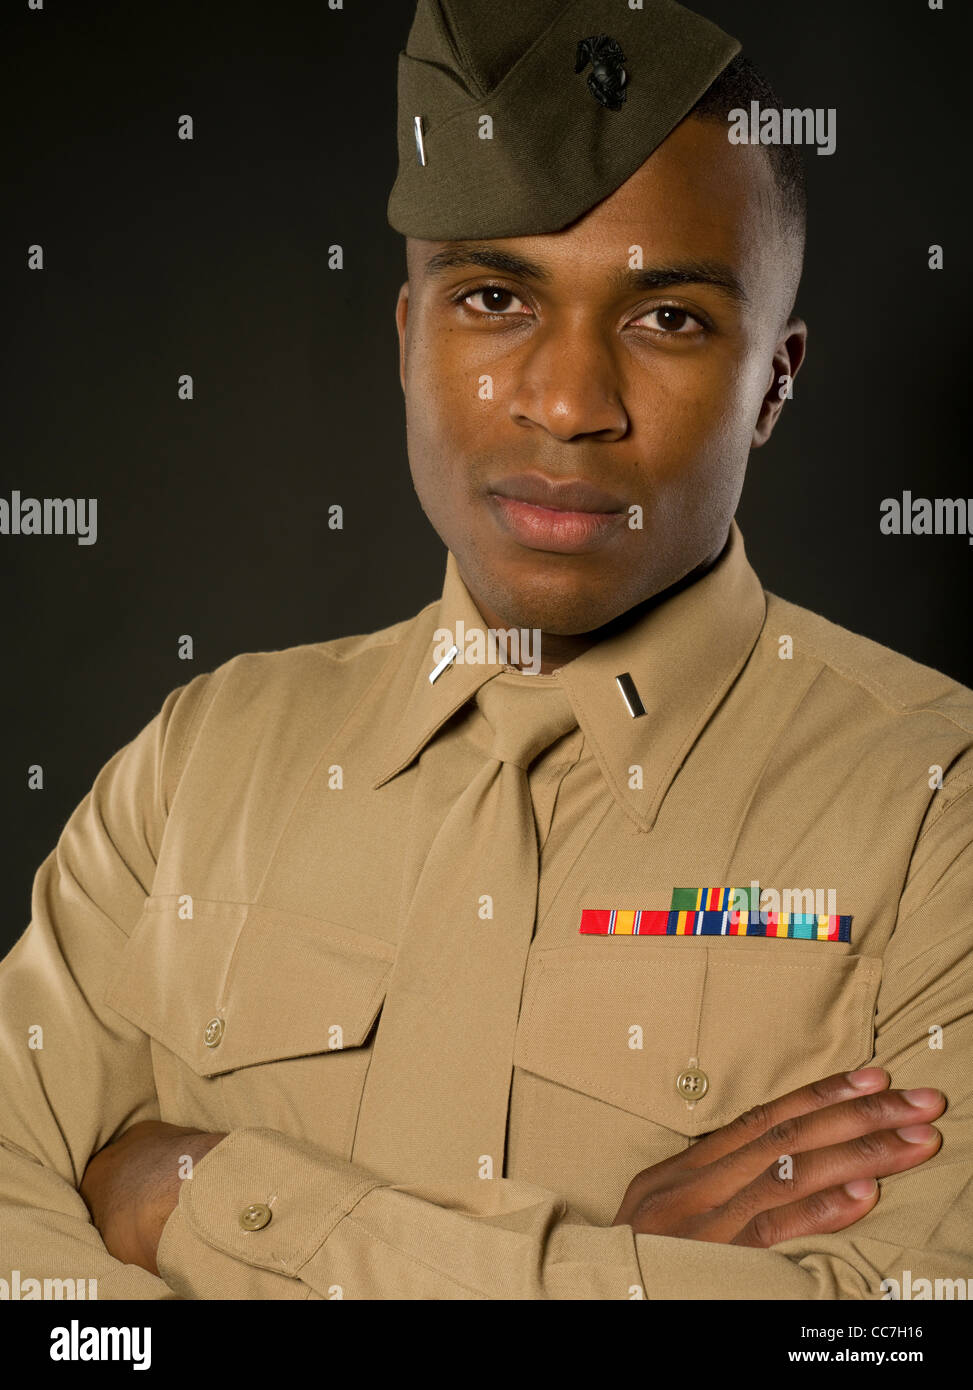 Marine Corps Officer Uniform 58